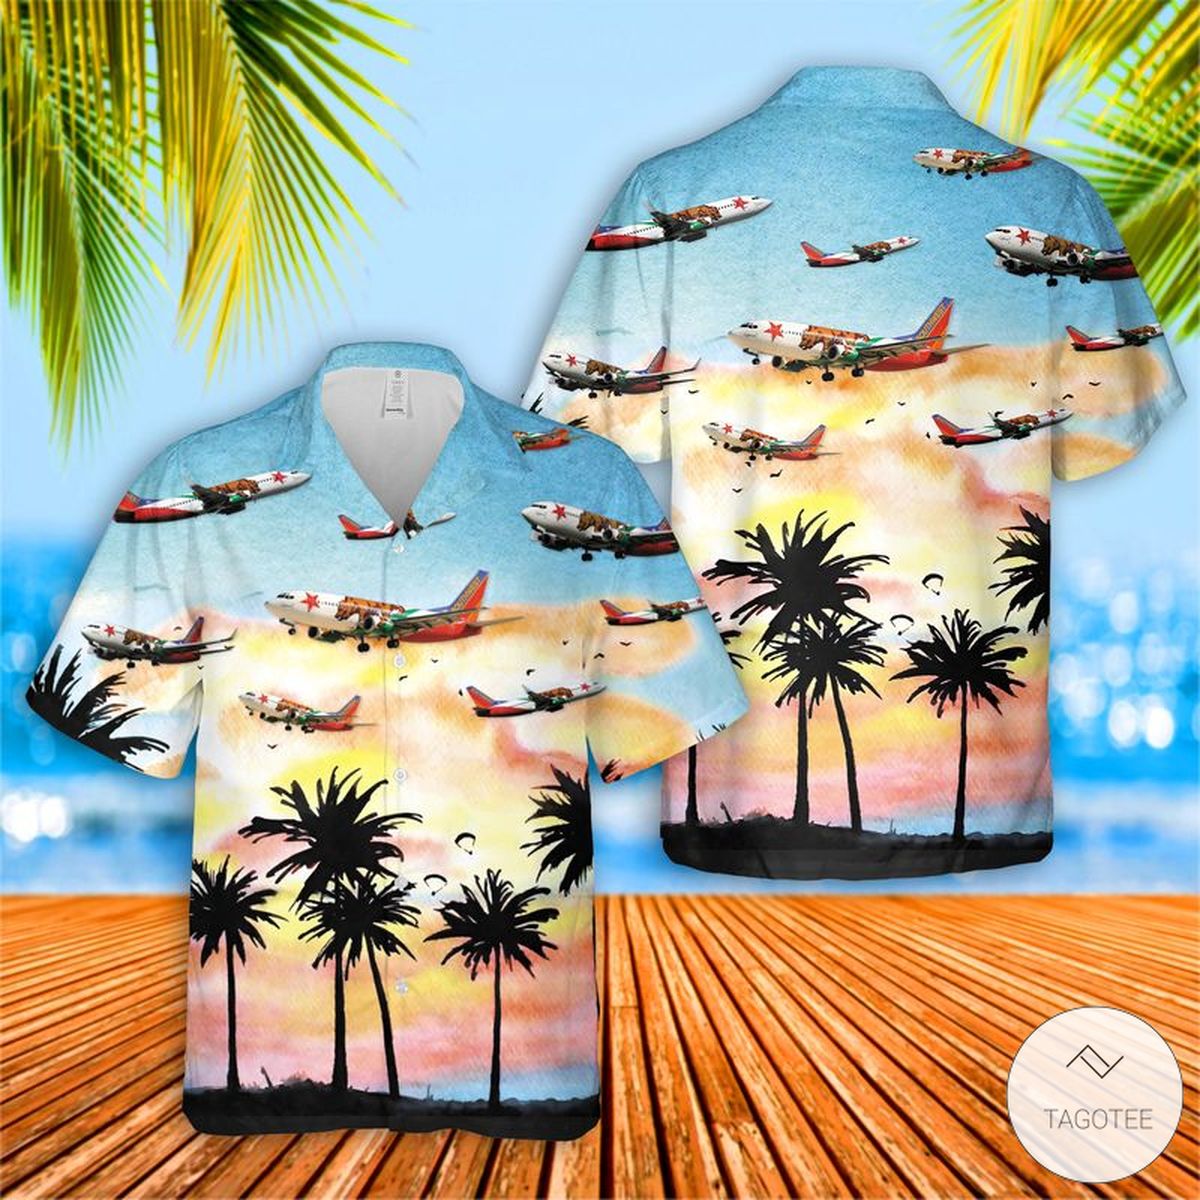 Southwest Airlines California Hawaiian Shirt